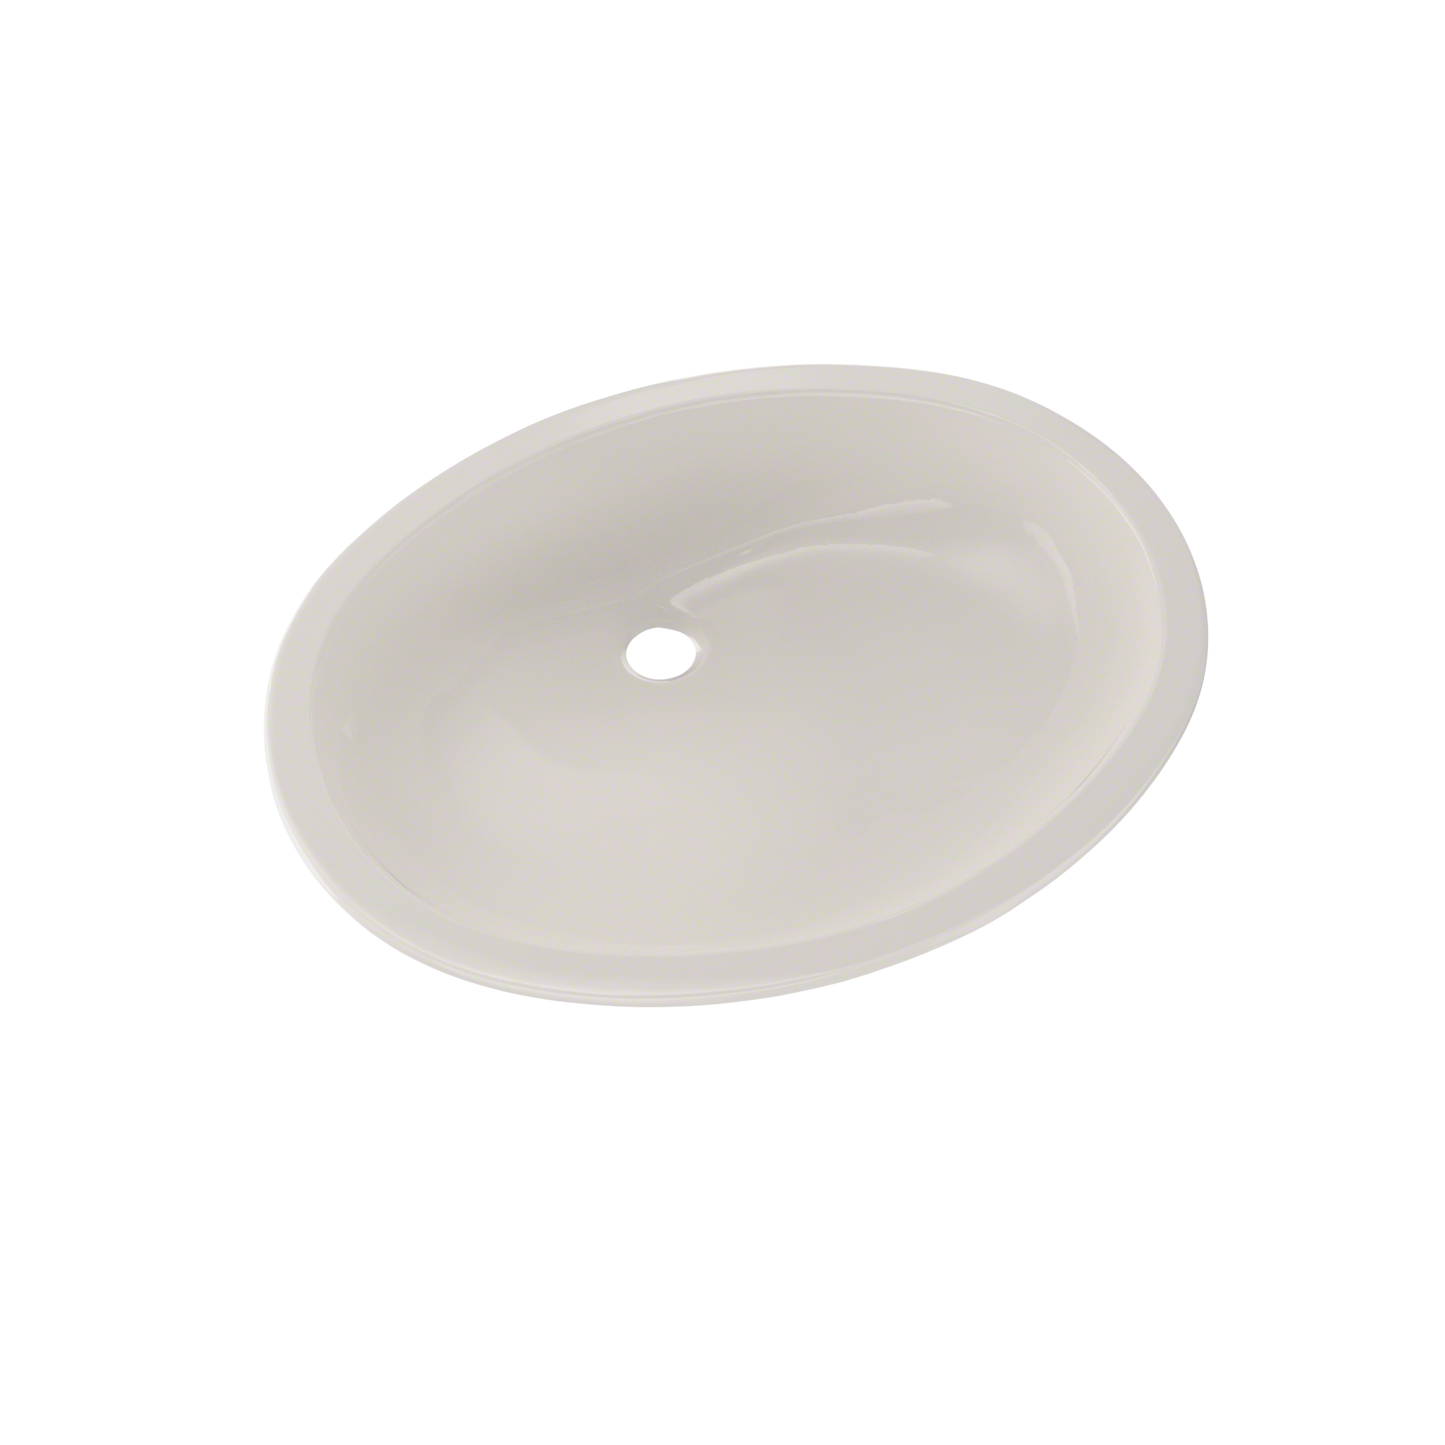 Toto LT597G#11 - Dantesca Undermount Bathroom Sink with Overflow and CeFiONtect Ceramic Glaze- Colon